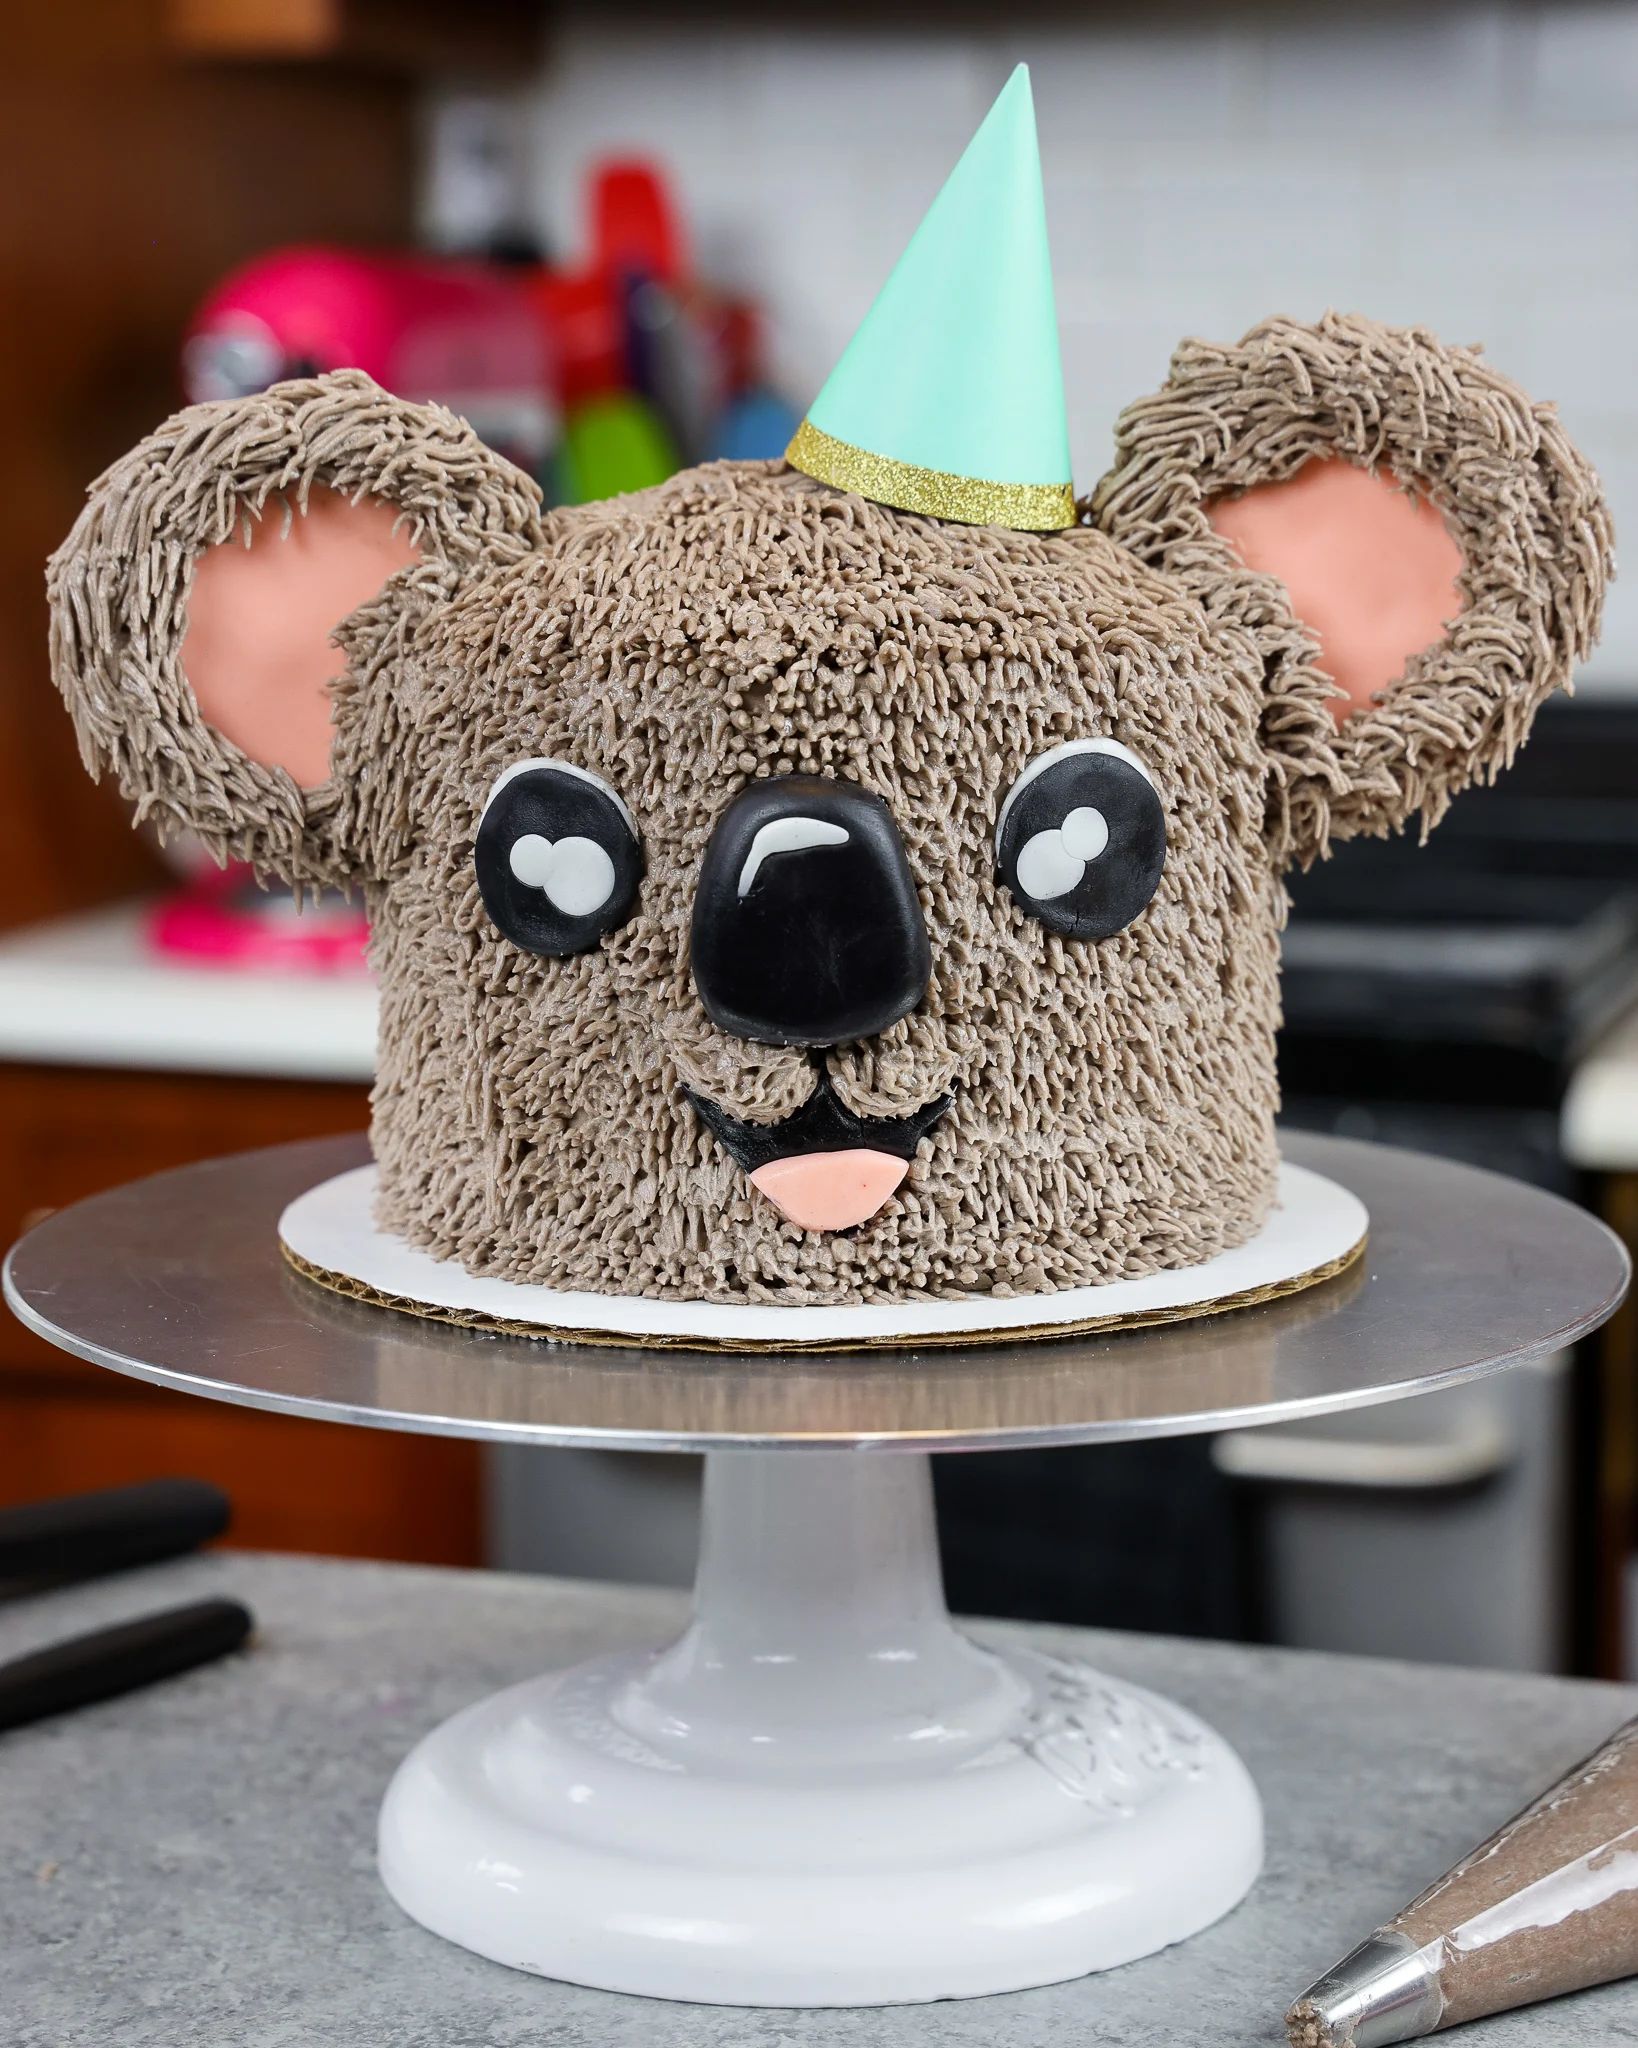 image of an adorable buttercream koala cake made with chocolate cake layers